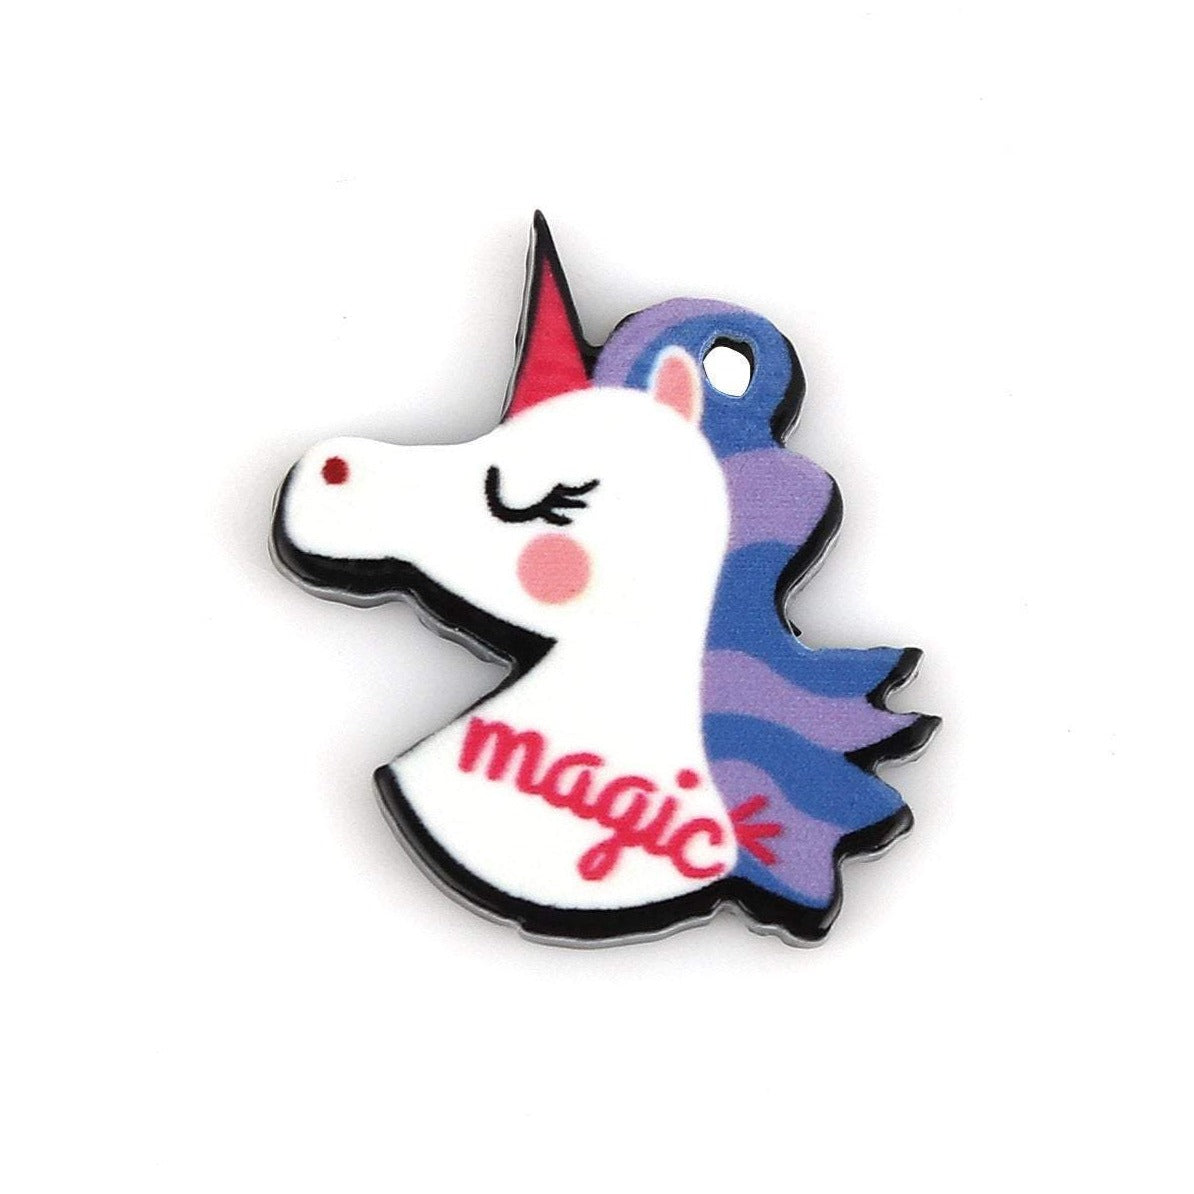 Magic unicorn charm, 5 acrylic unicorn charms